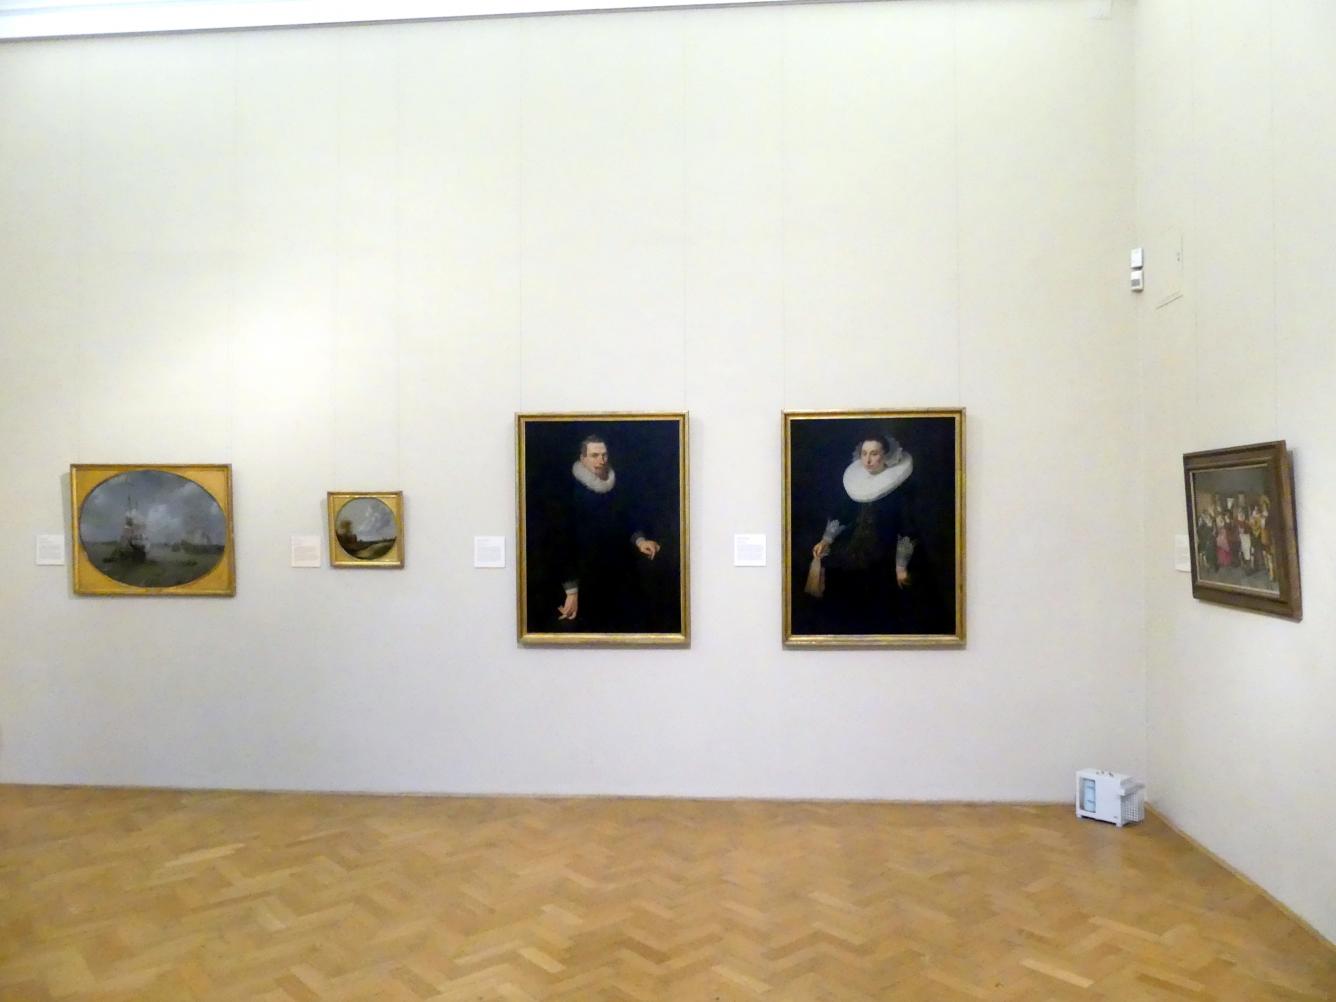 Prag, Nationalgalerie im Palais Sternberg, 2. Obergeschoss, Saal 1, Bild 1/3